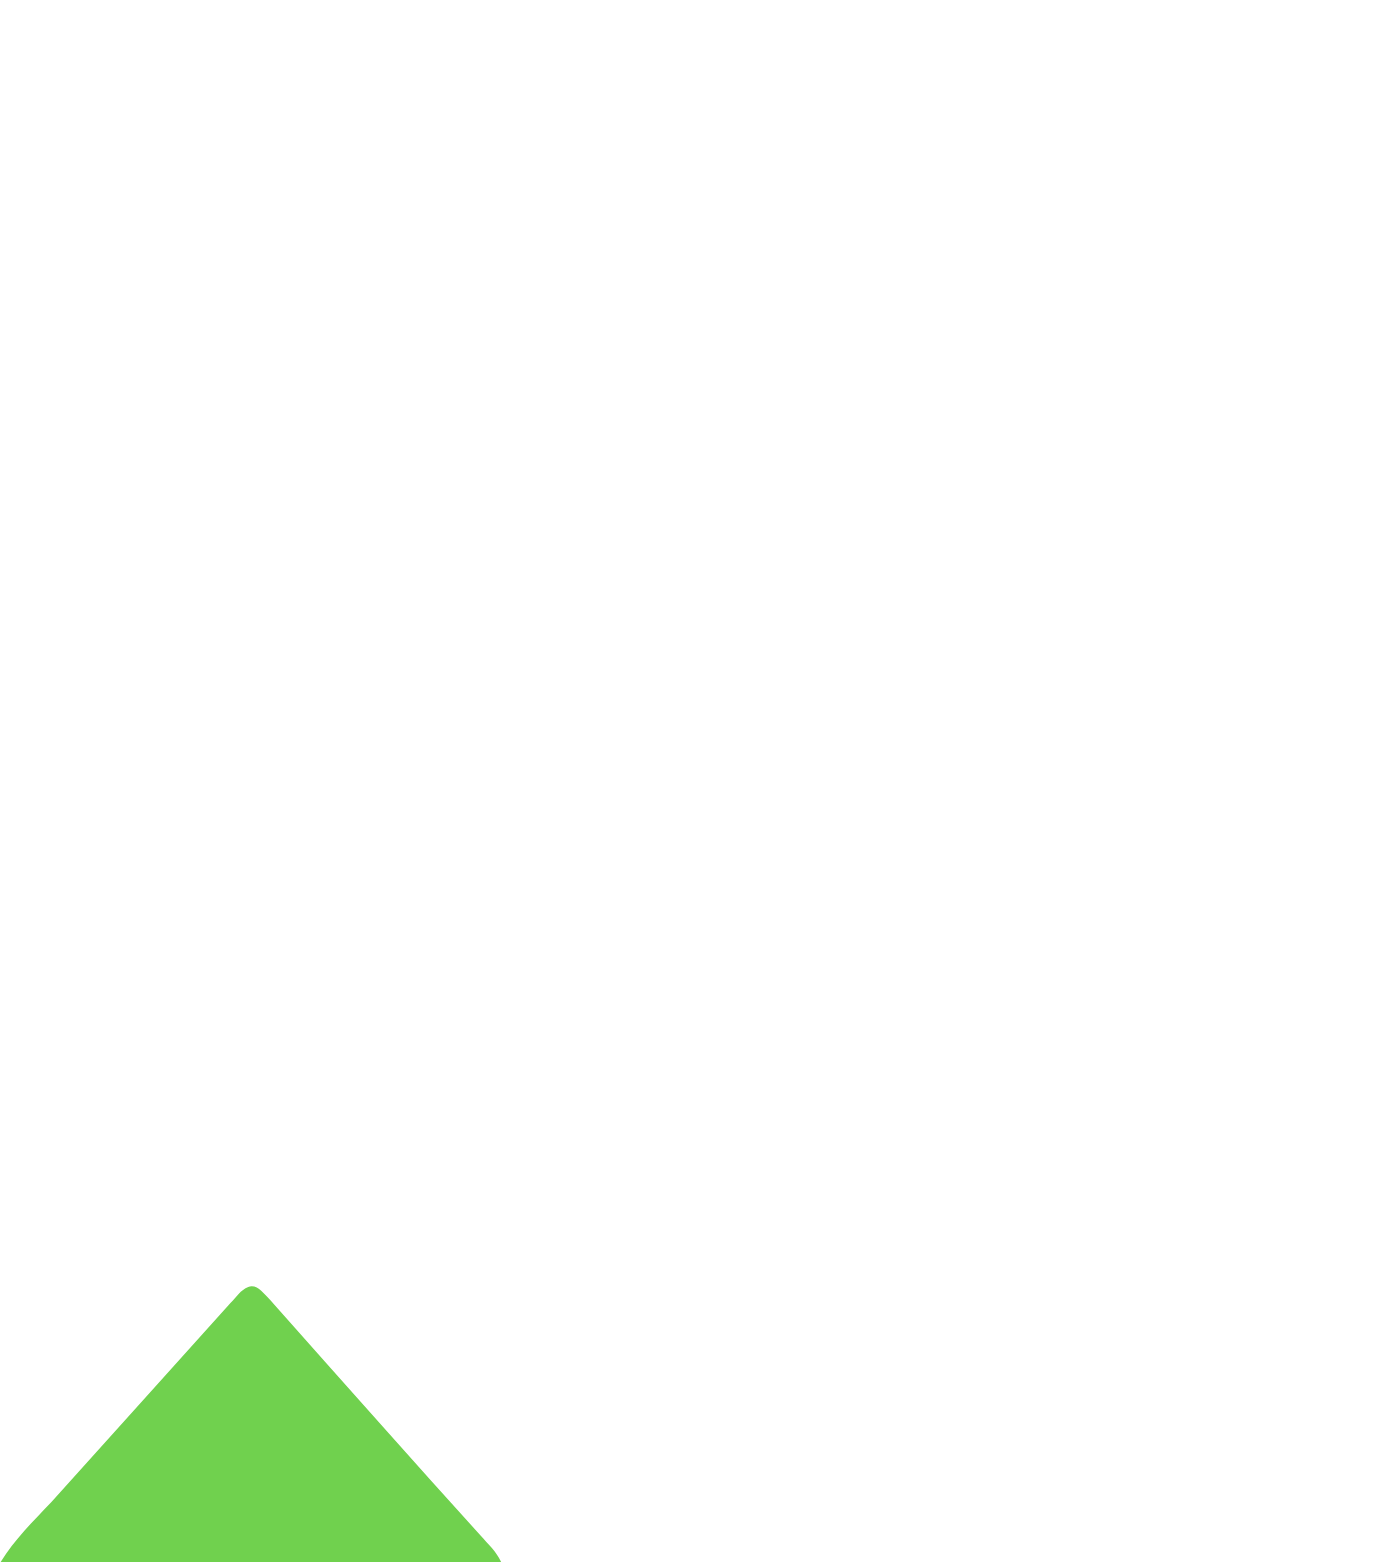 Atlantica logo for dark backgrounds (transparent PNG)